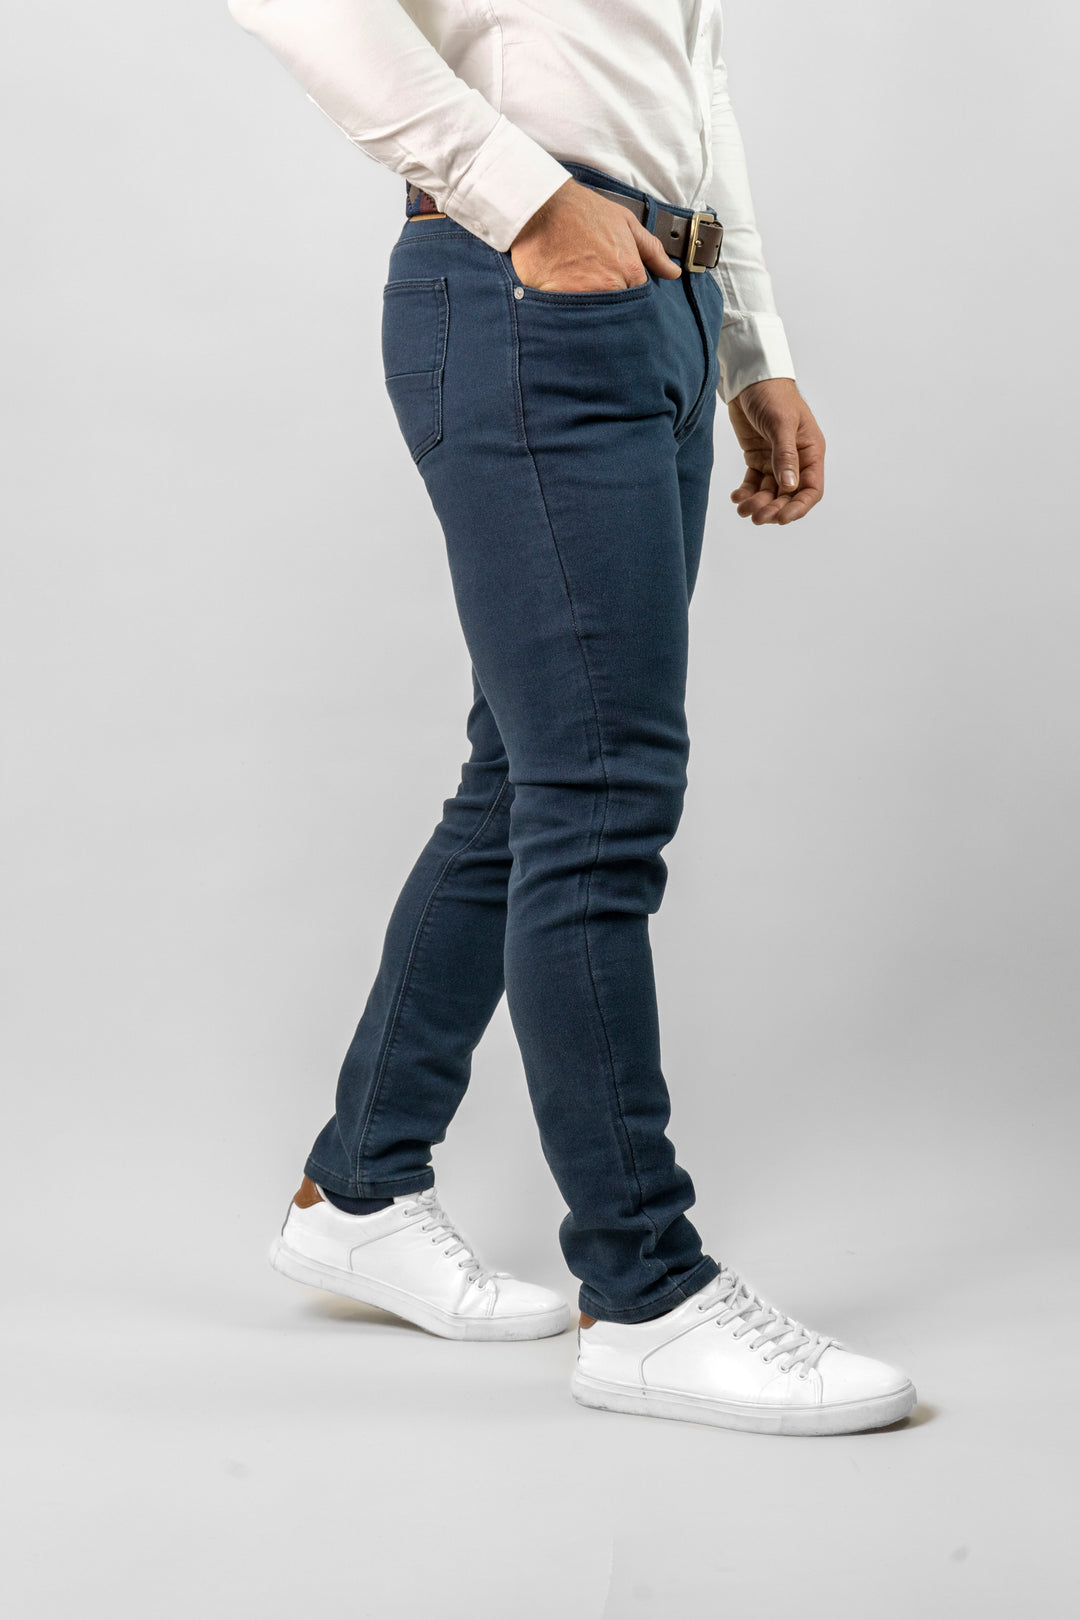 Skinny Jeans Hombre Azul Medio